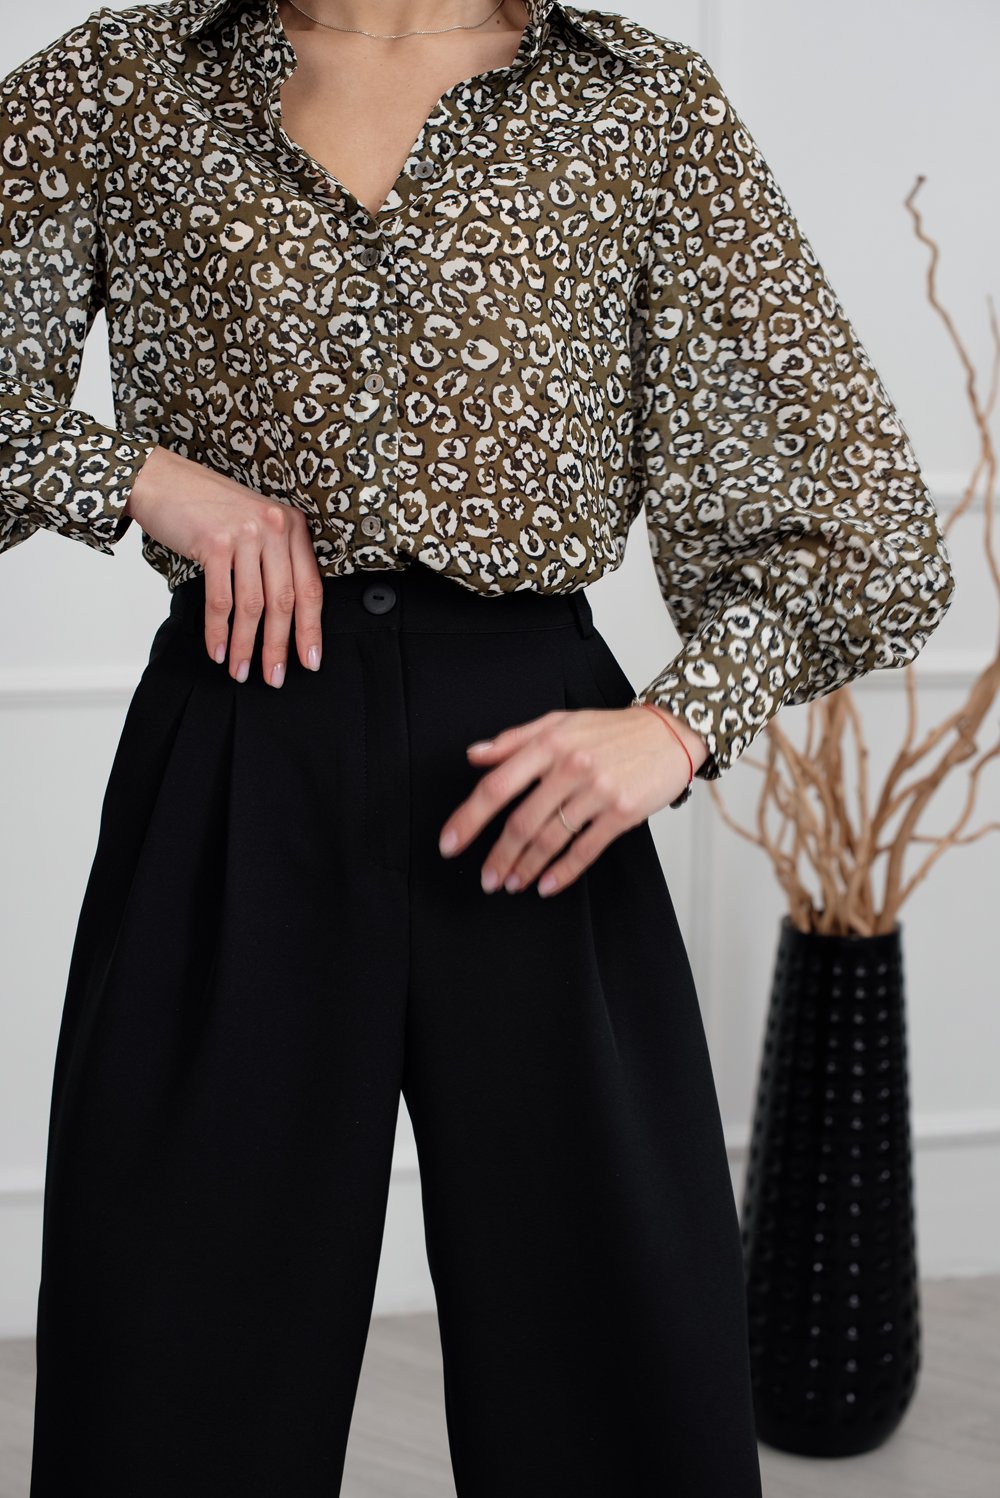 Chiffon blouse with animal print